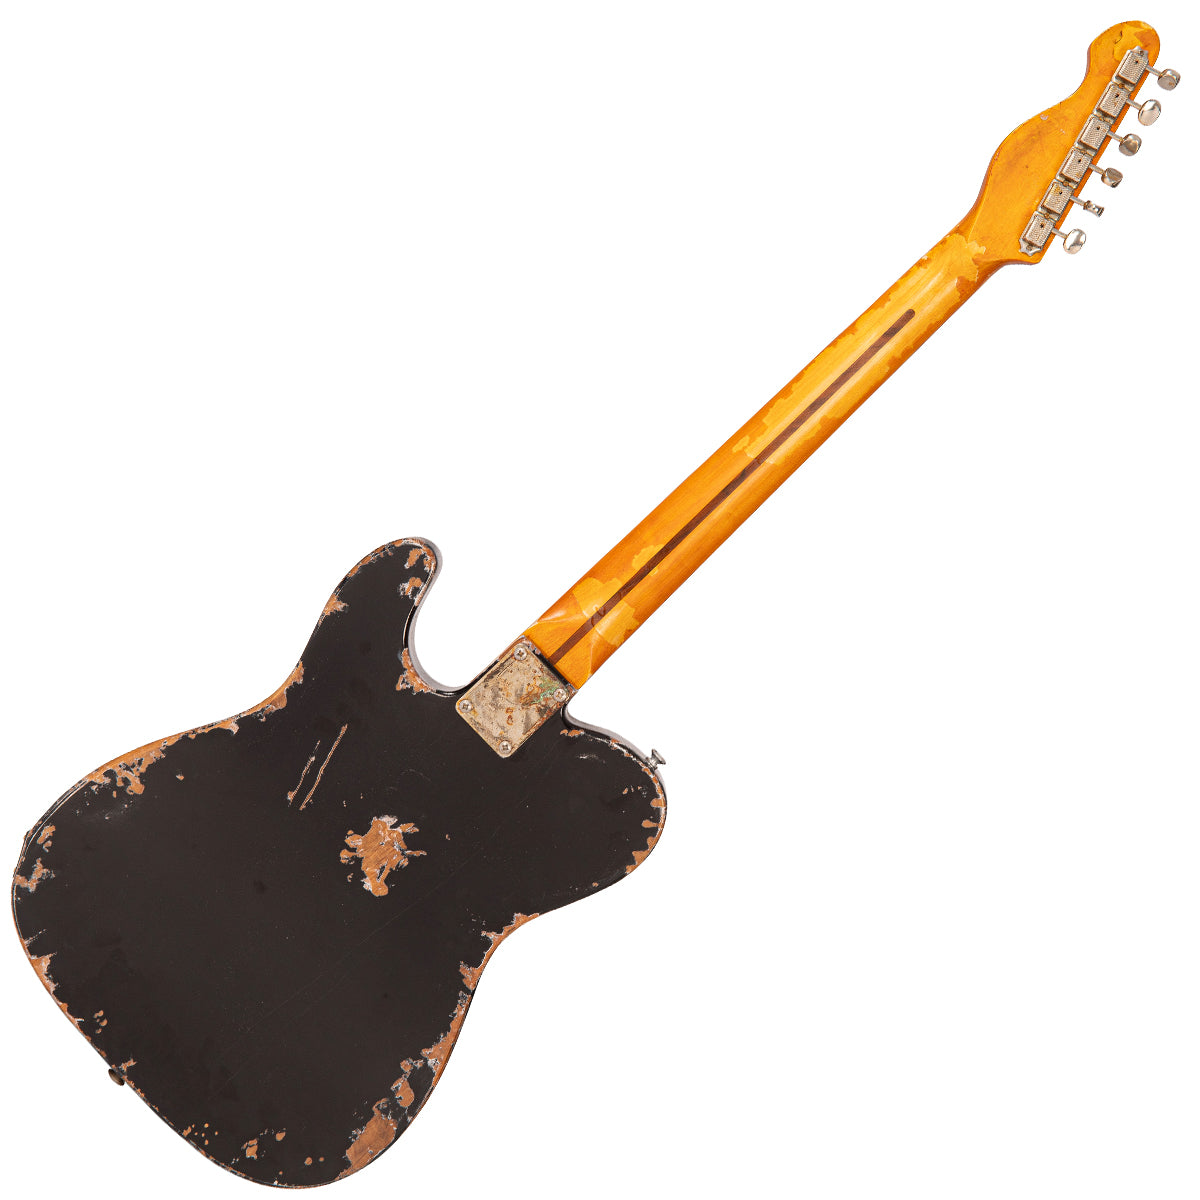 Vintage V52 ProShop Unique - Black Icon with Bigsby, Electrics for sale at Richards Guitars.